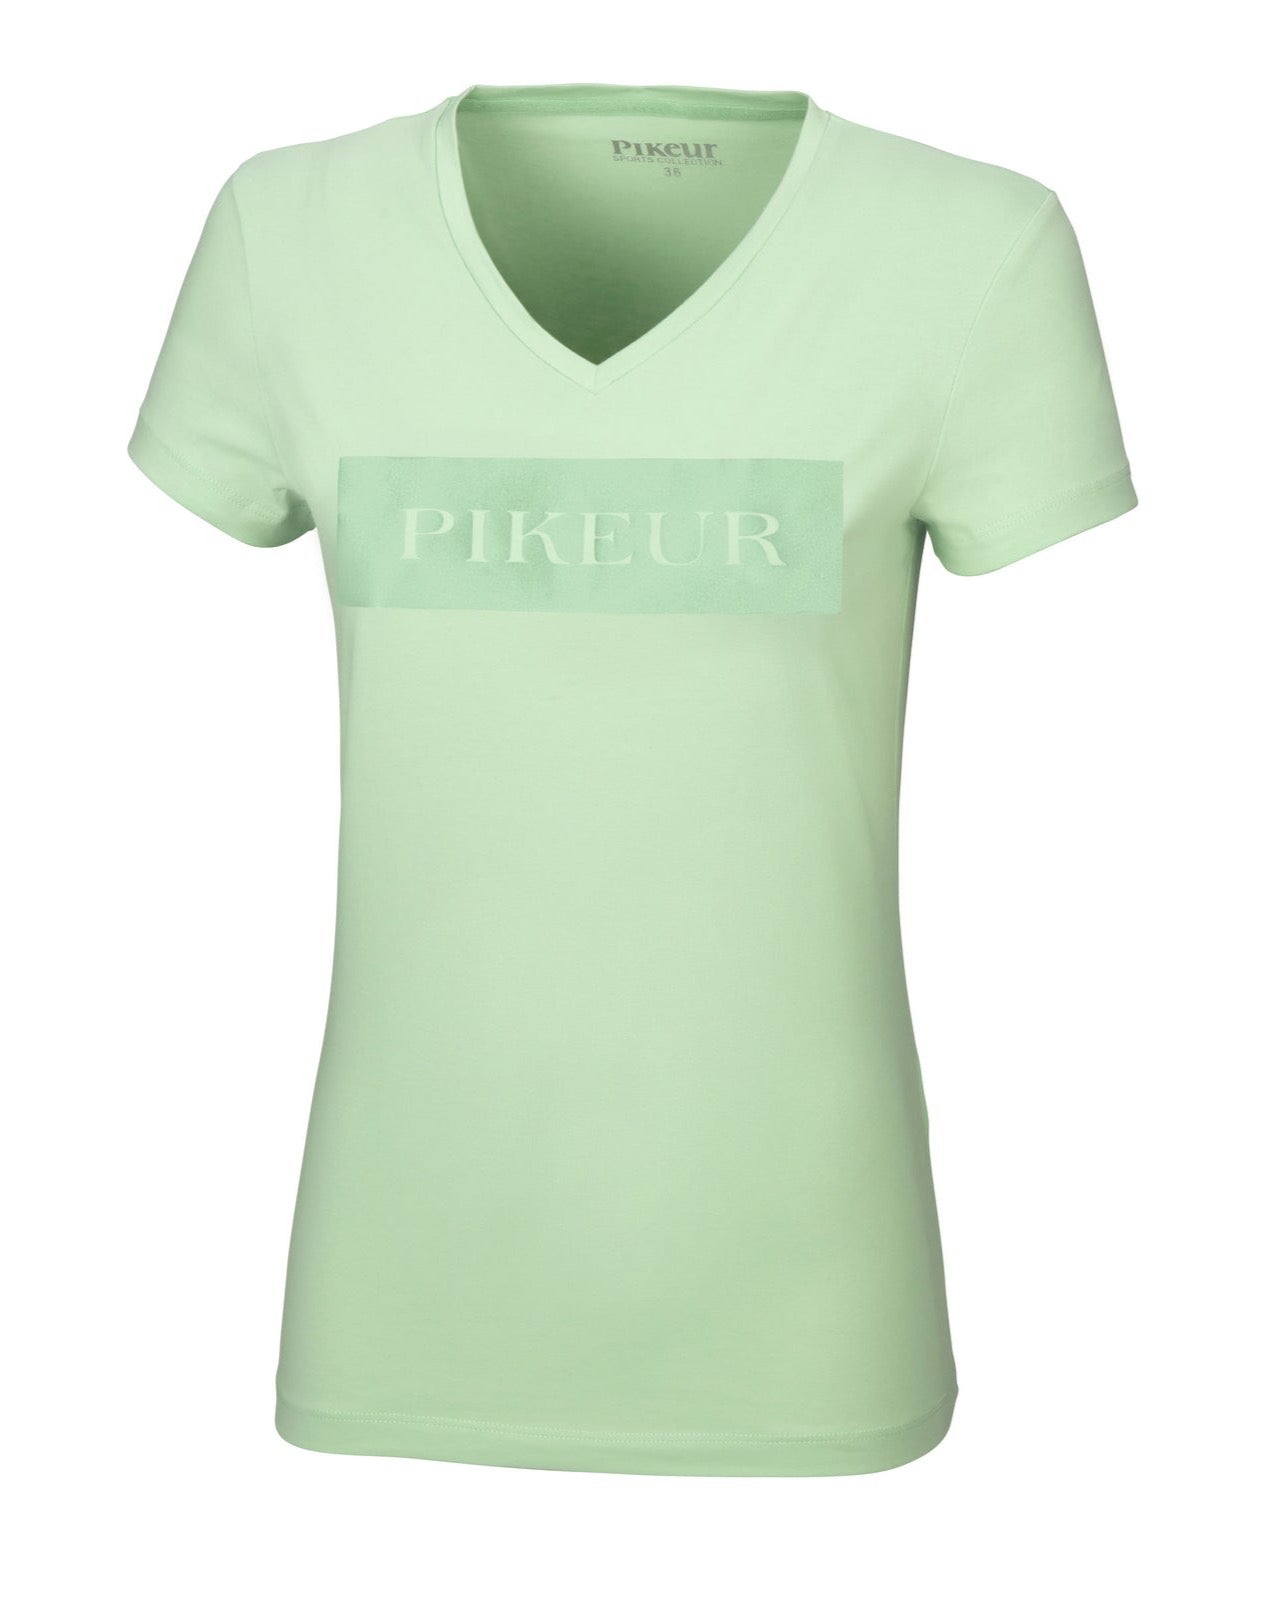 Pikeur Franja ladies t-shirt in Soft Lind